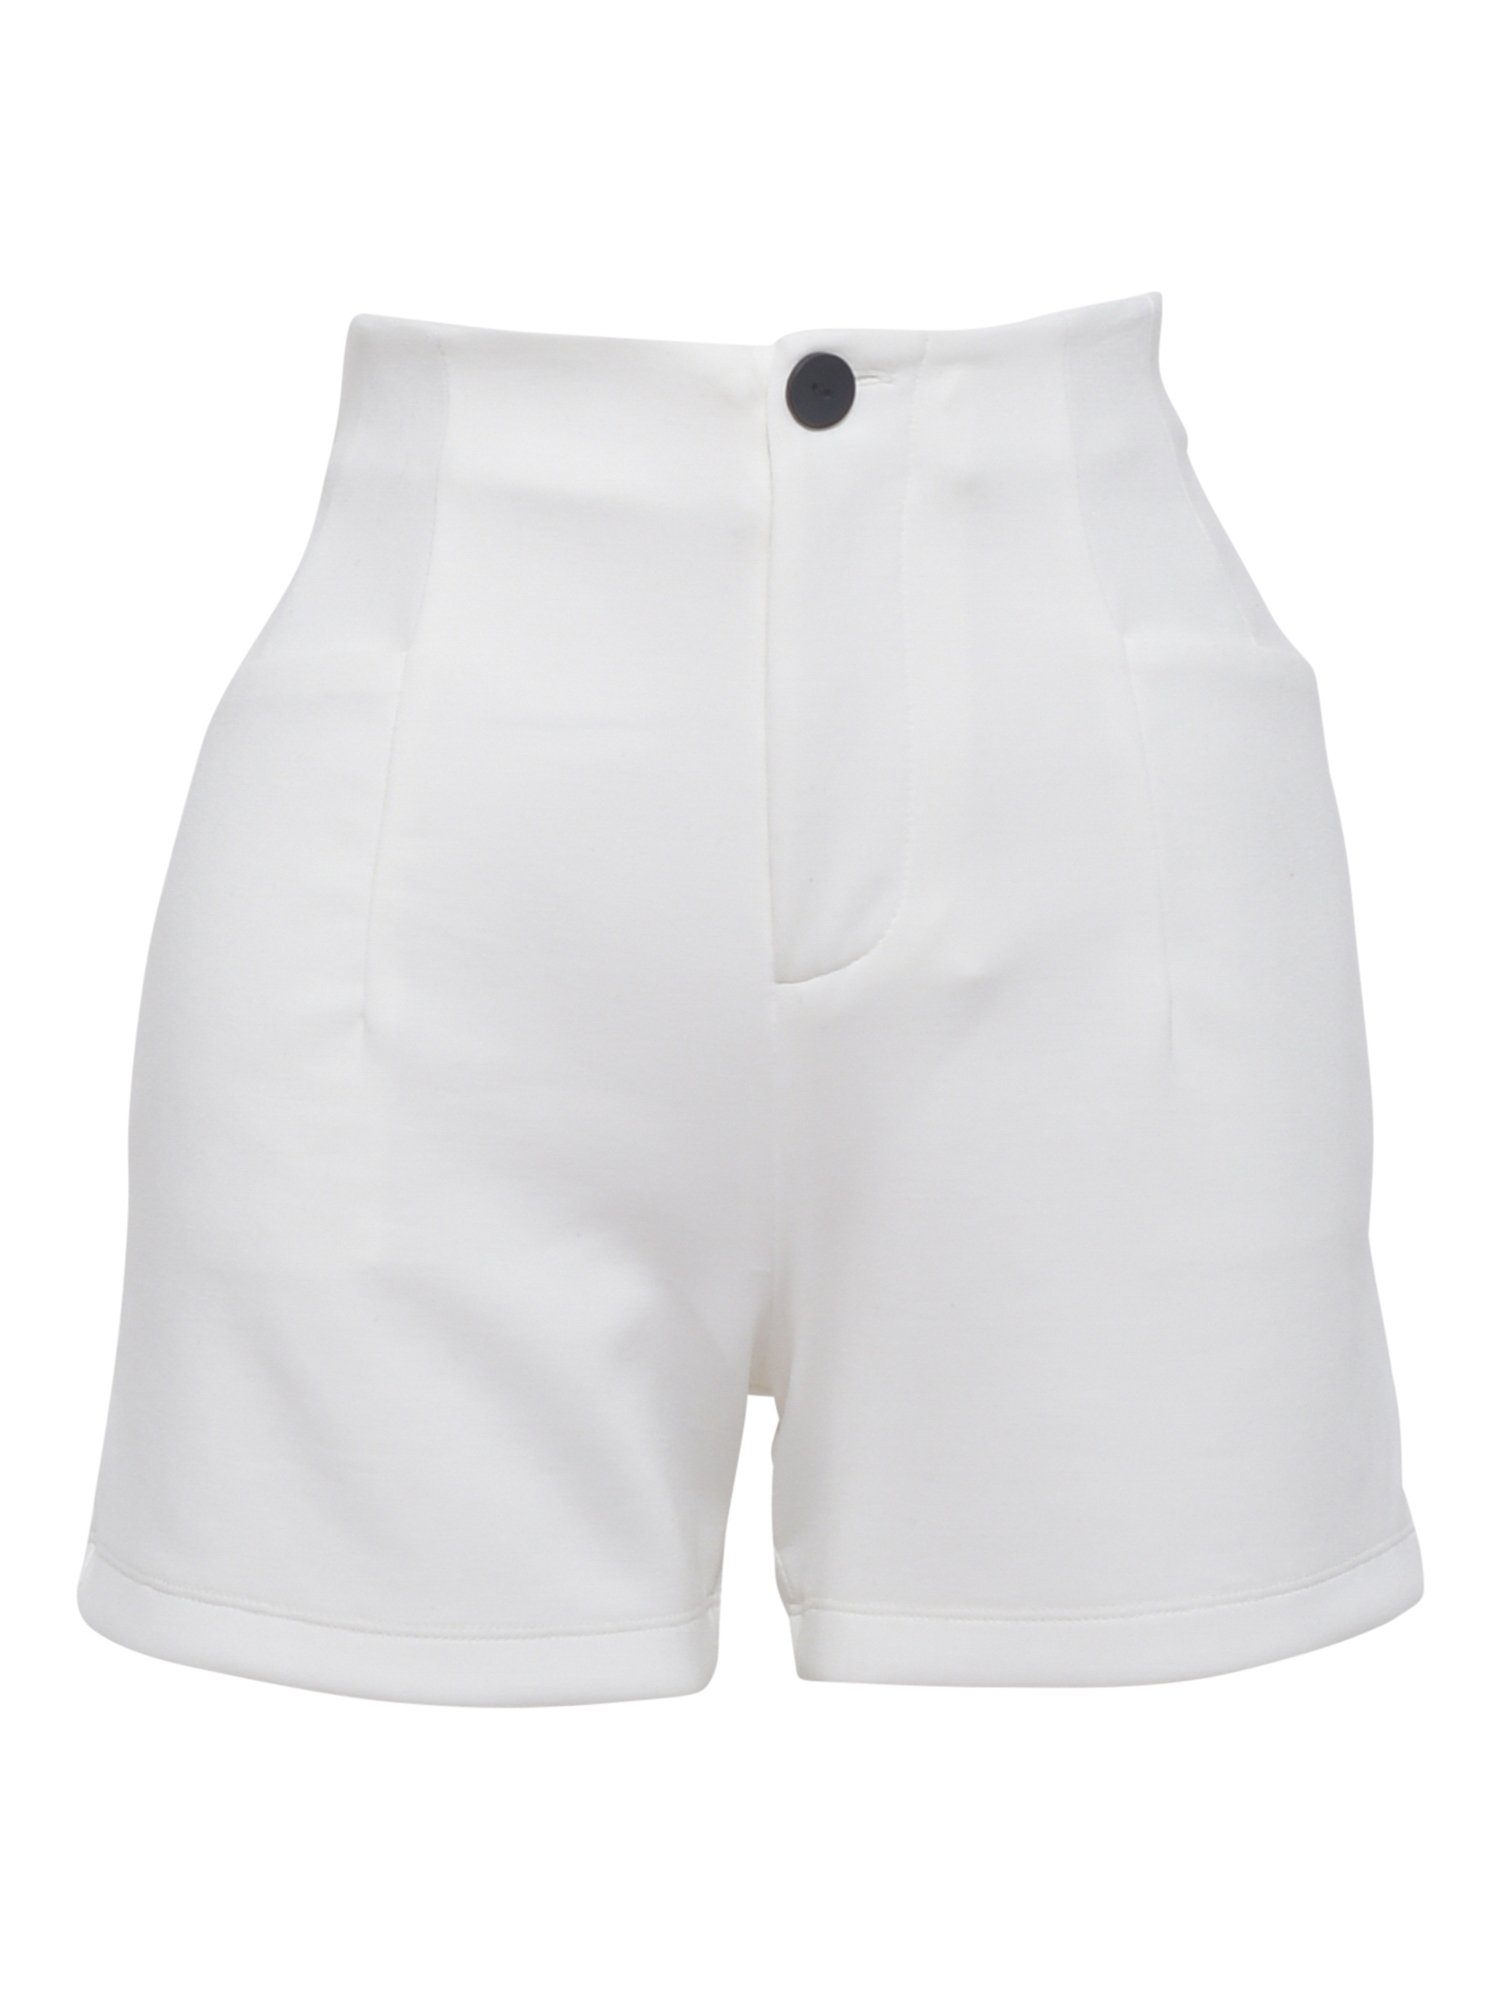 Freshlions Shorts Shorts 'Wilma' weiss | Shorts